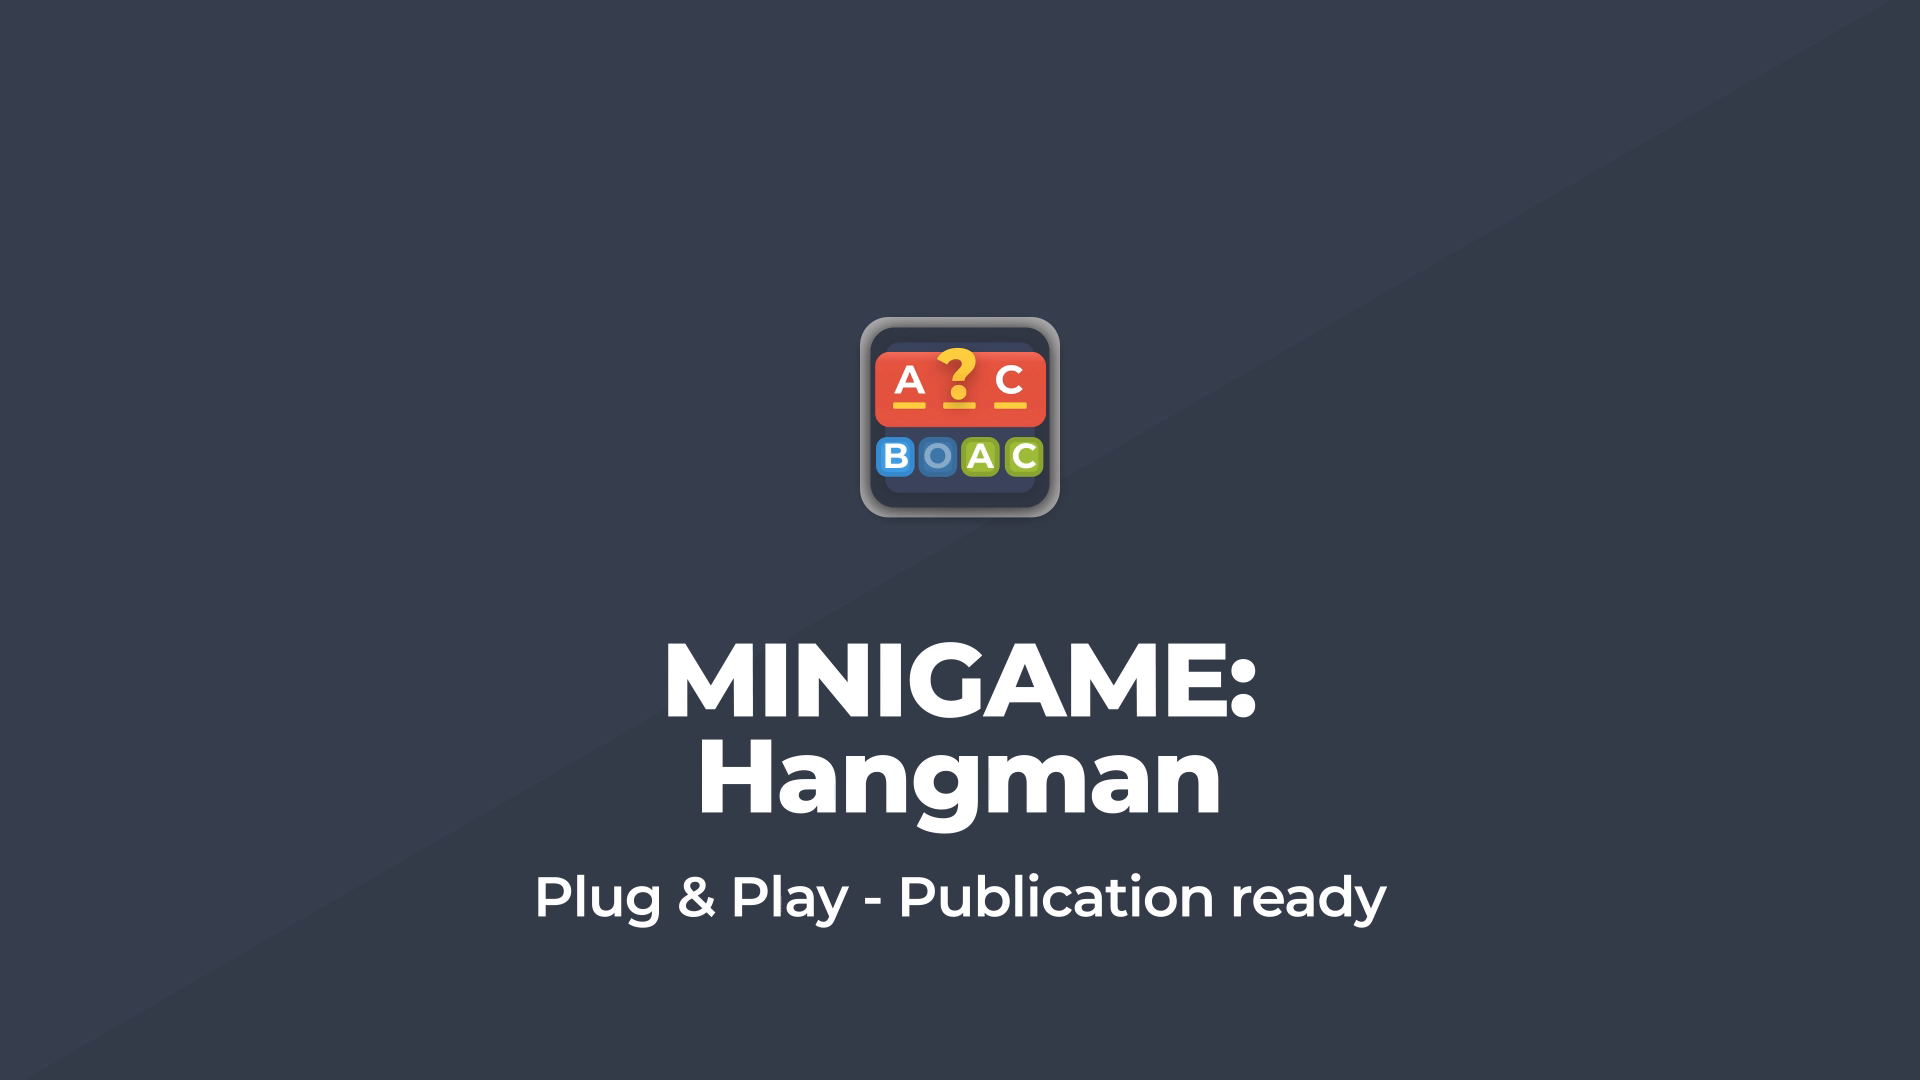 PRO 2D Hangman Game Template, Tutorials